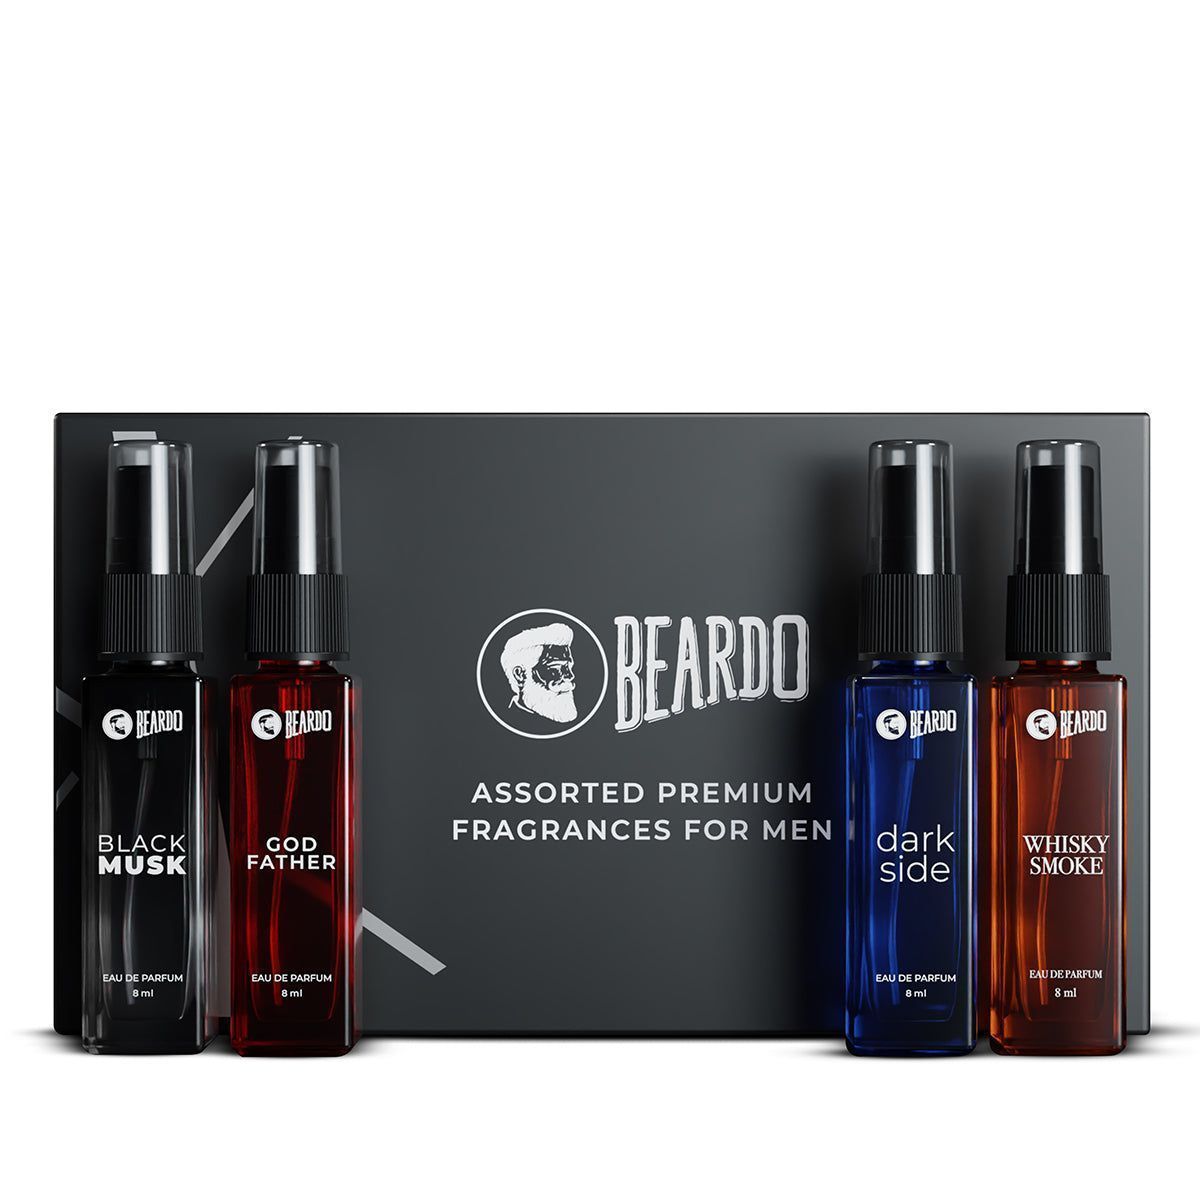 Beardo Assorted Premium fragrances for Men